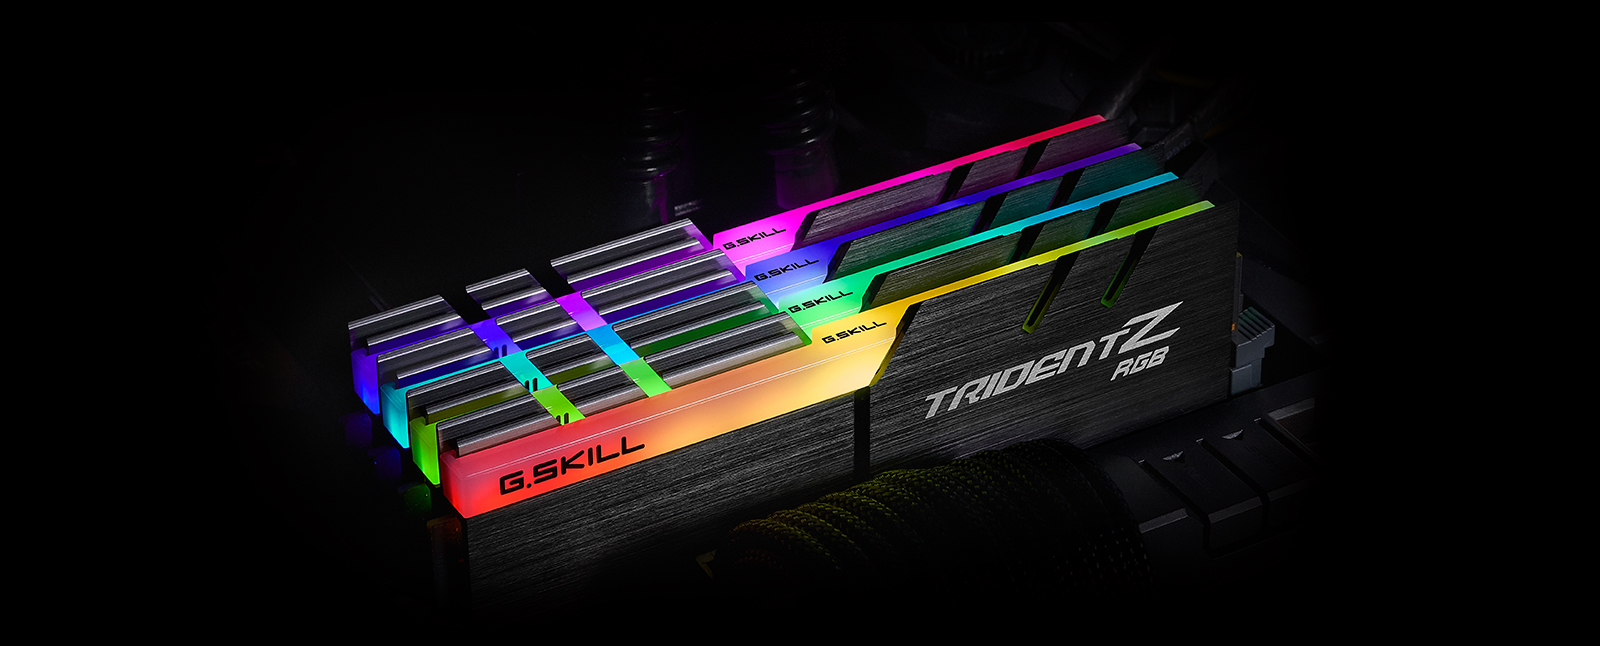 G.Skill Trident Z RGB 8GB DDR4 3200MHz RAM RGB Lighting